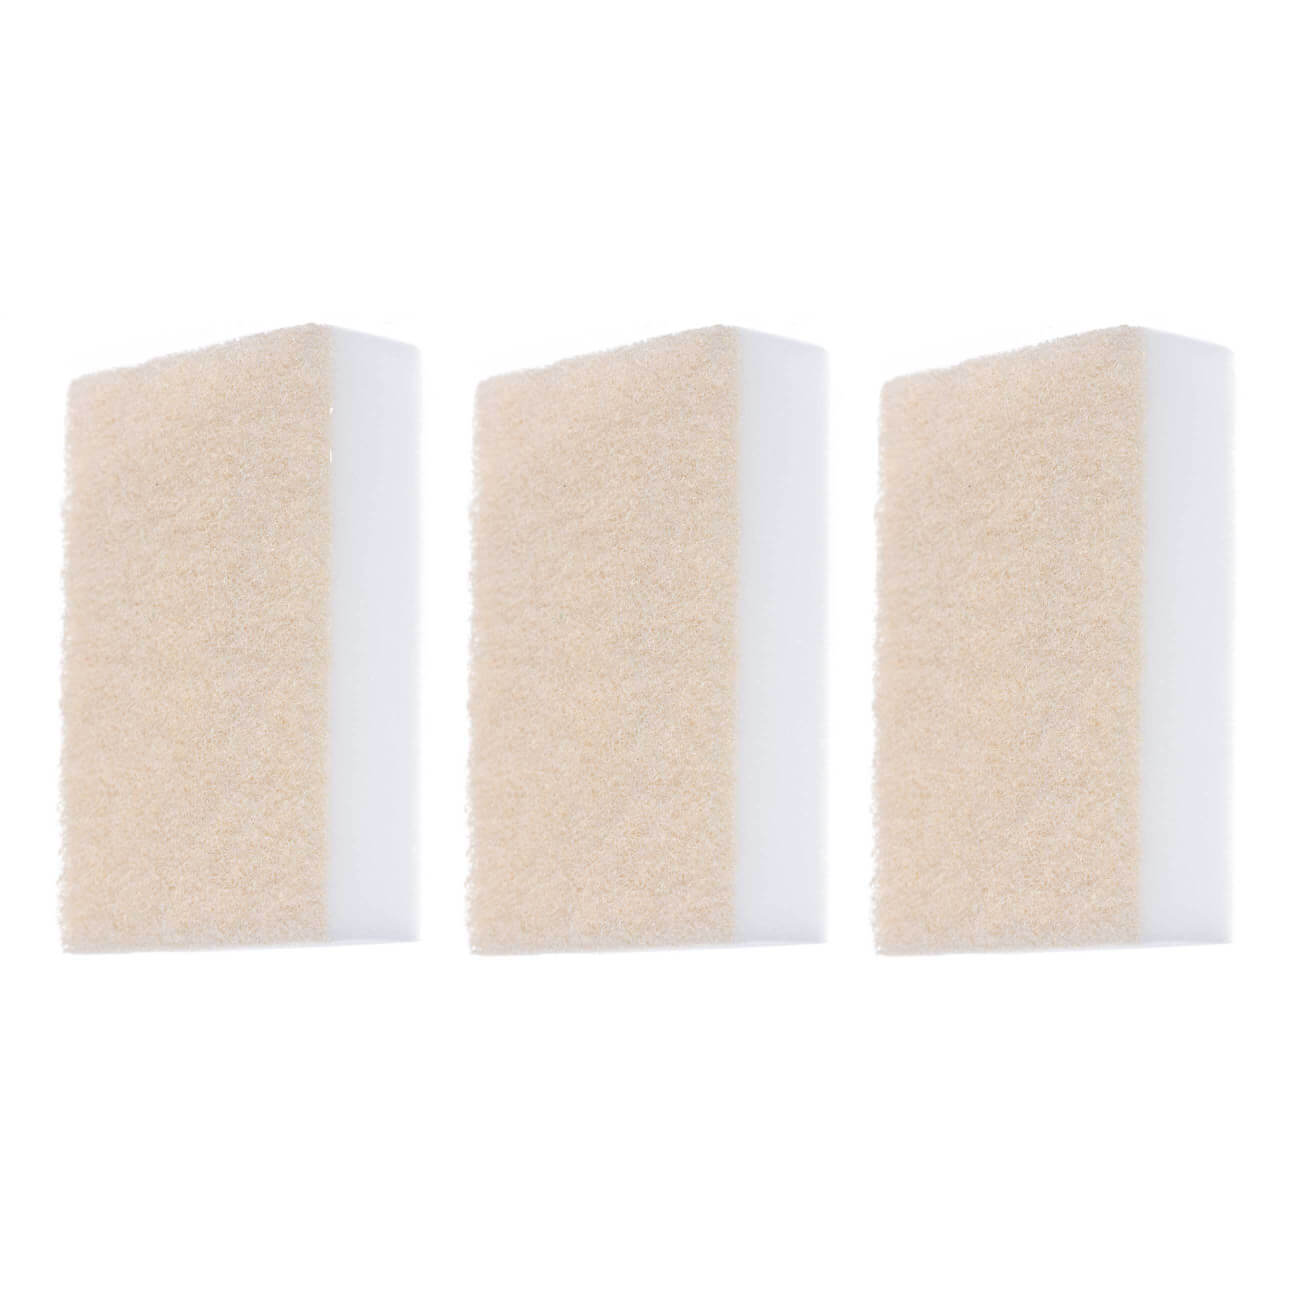 Melamine sponge, 3 pcs, with abrasive insert, beige, Clean изображение № 1